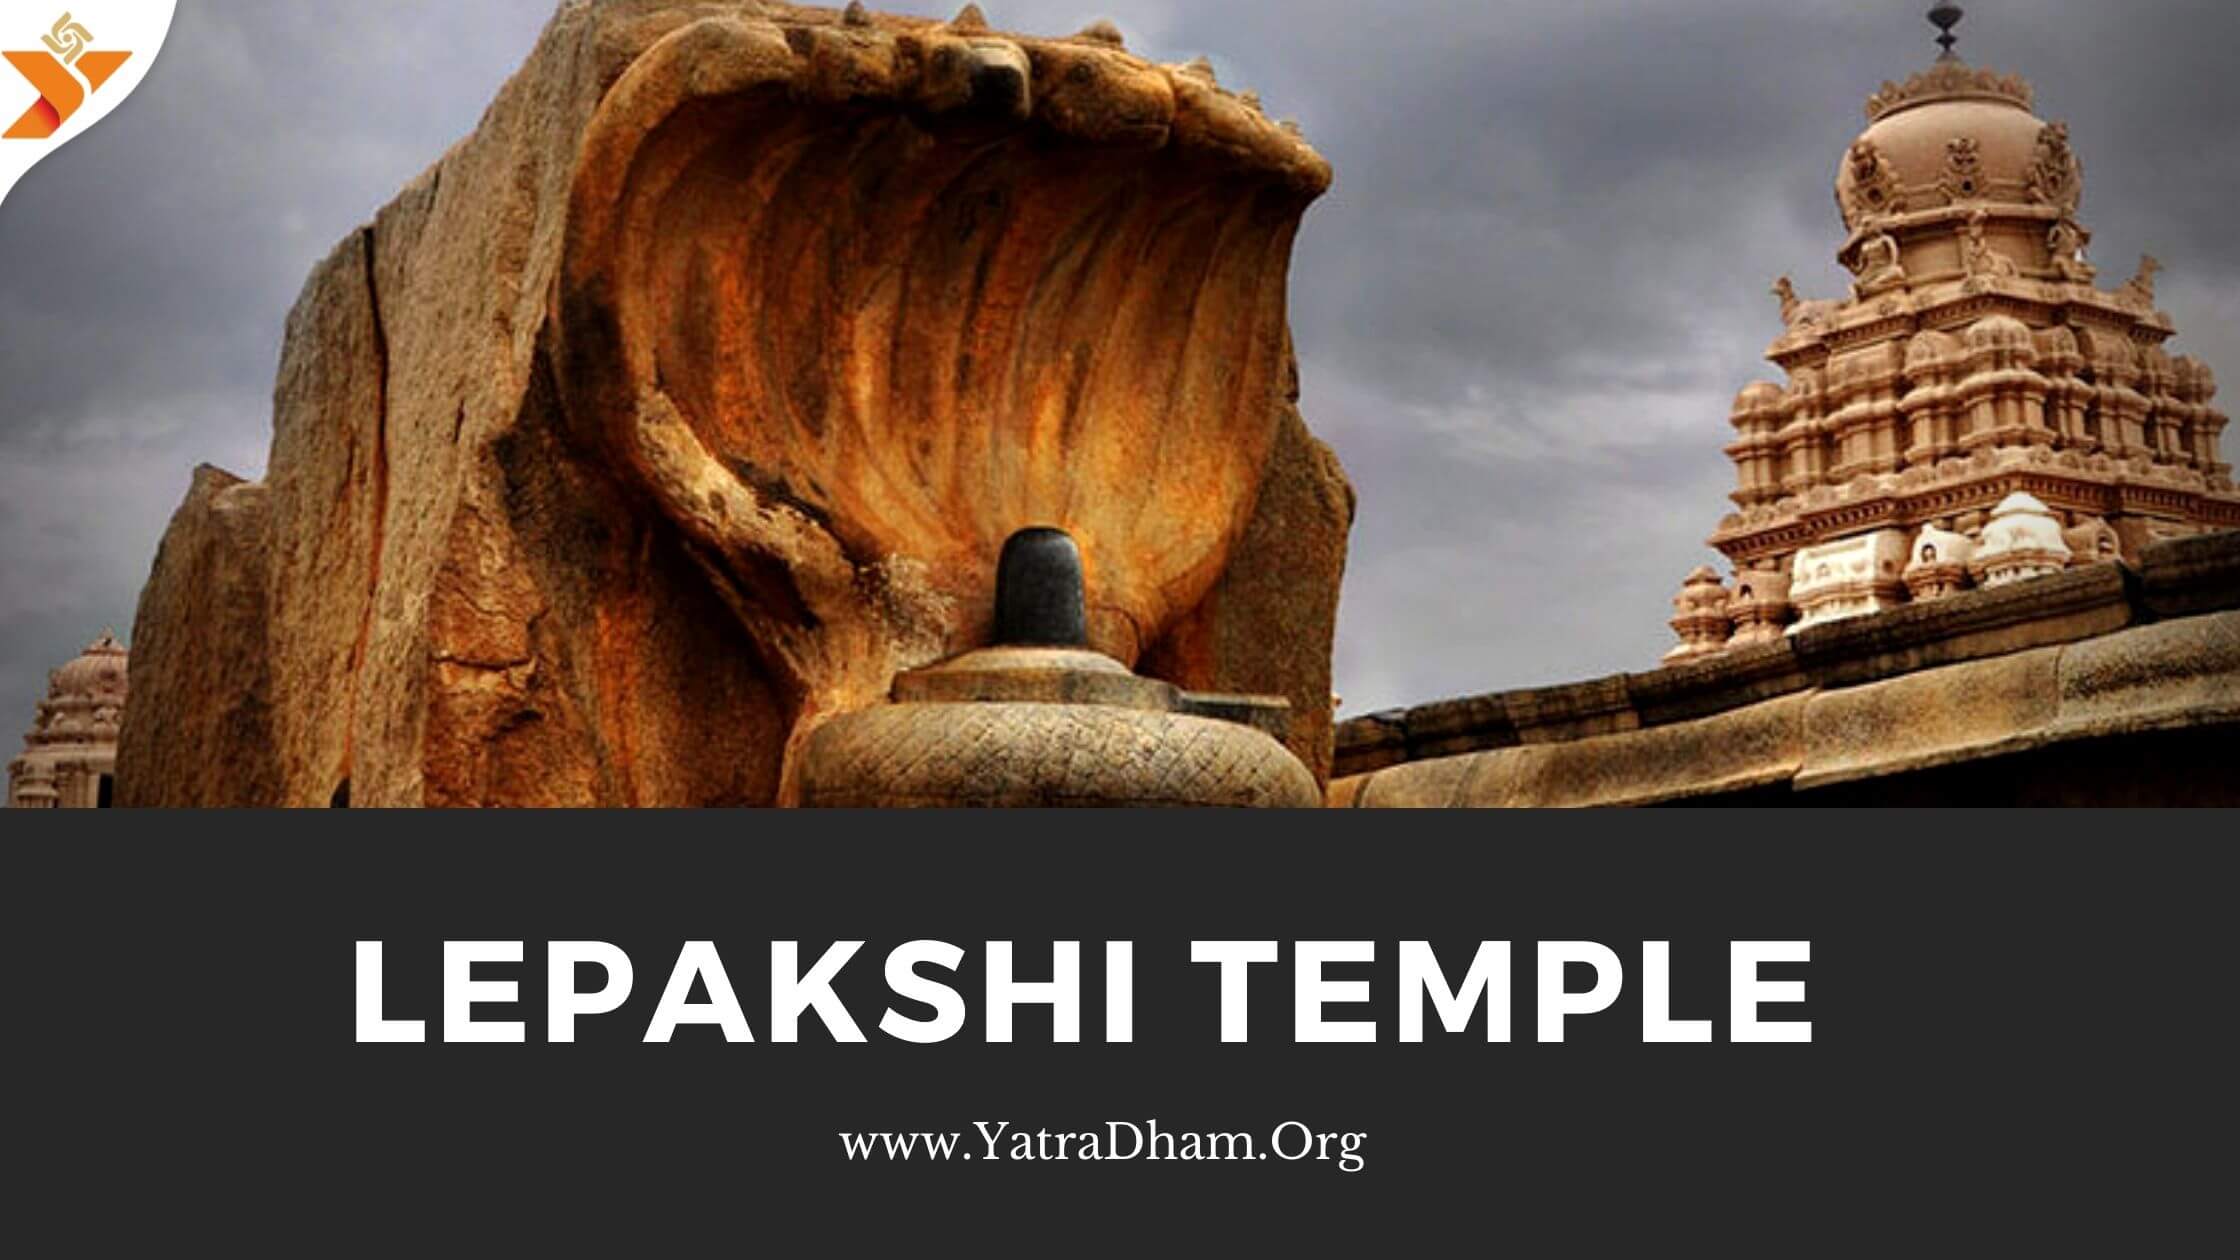 Lepakshi Temple images